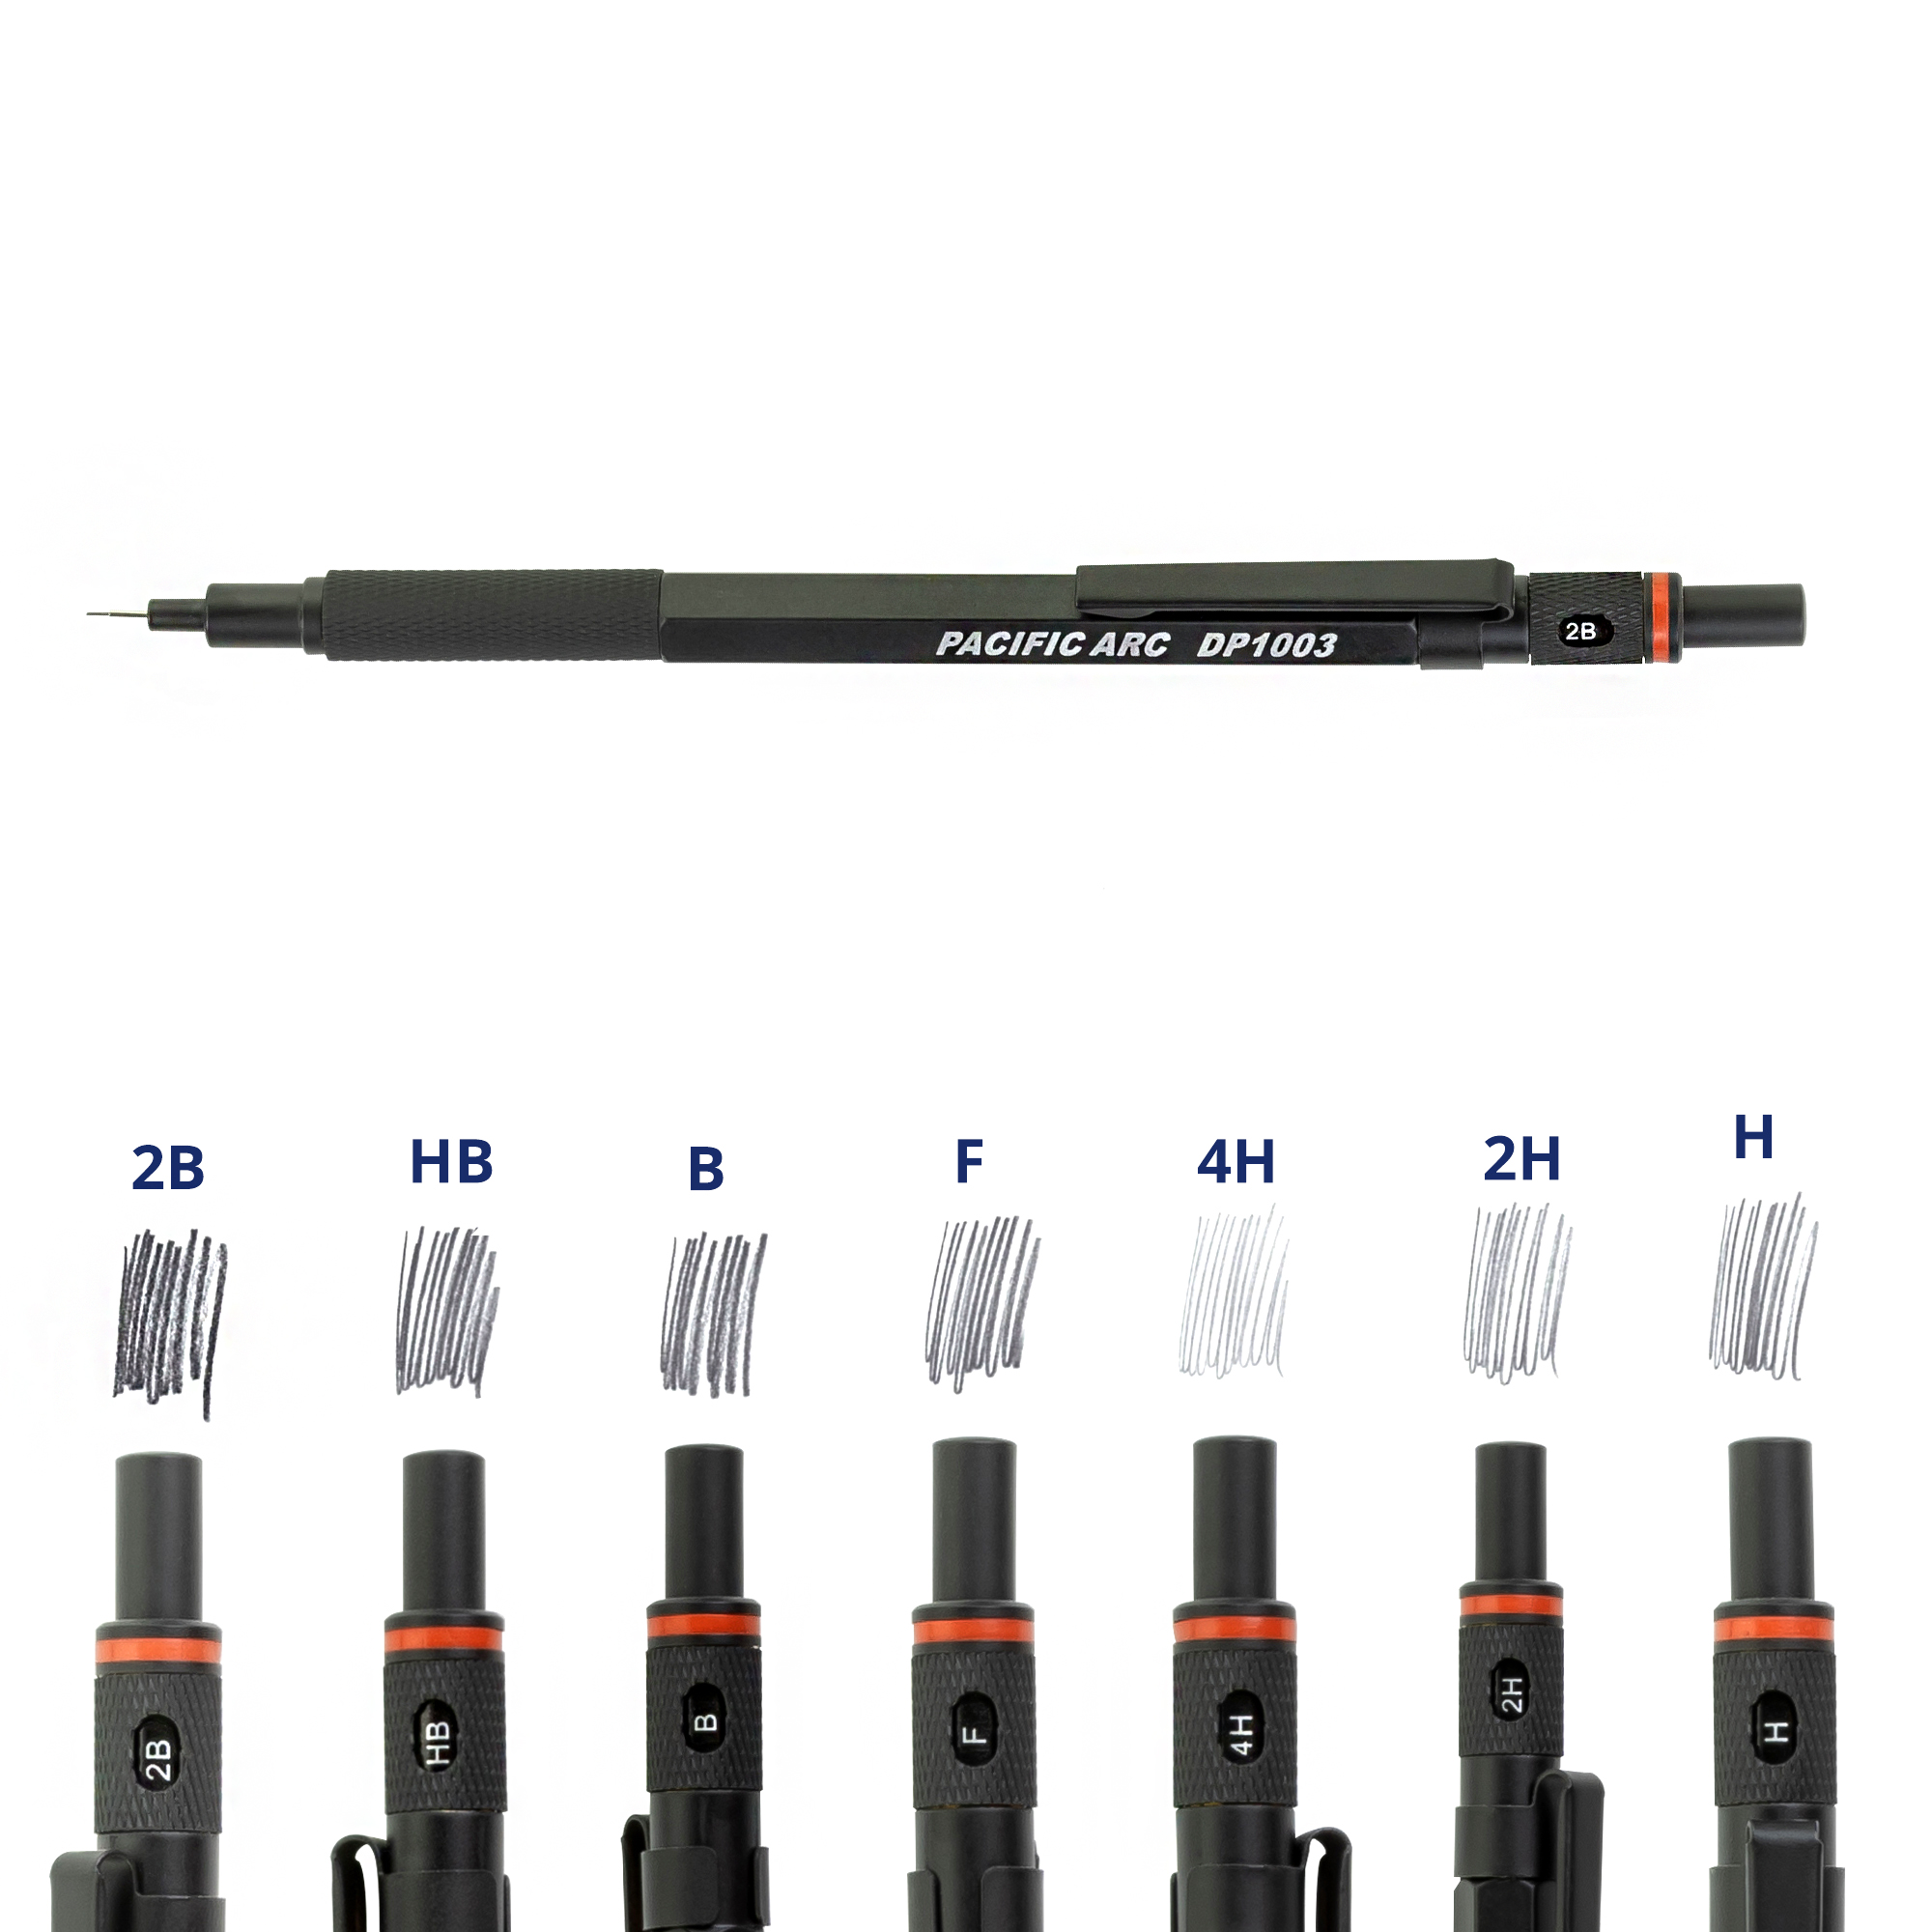 Pacific Arc Chromagraph All-Metal Mechanical Pencils